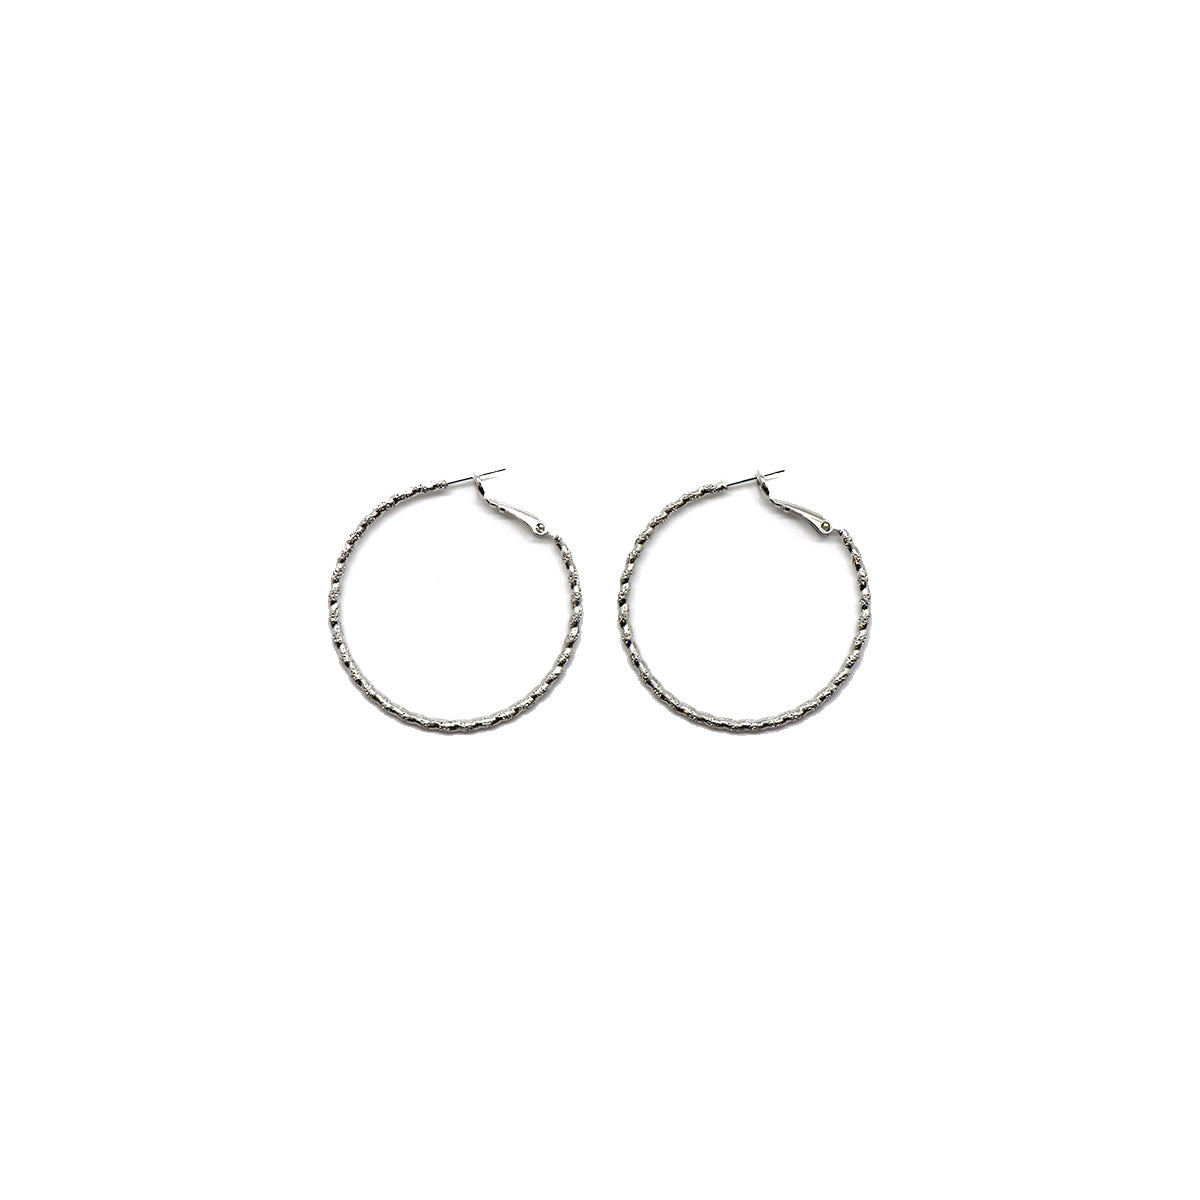 1" silver hoop earring